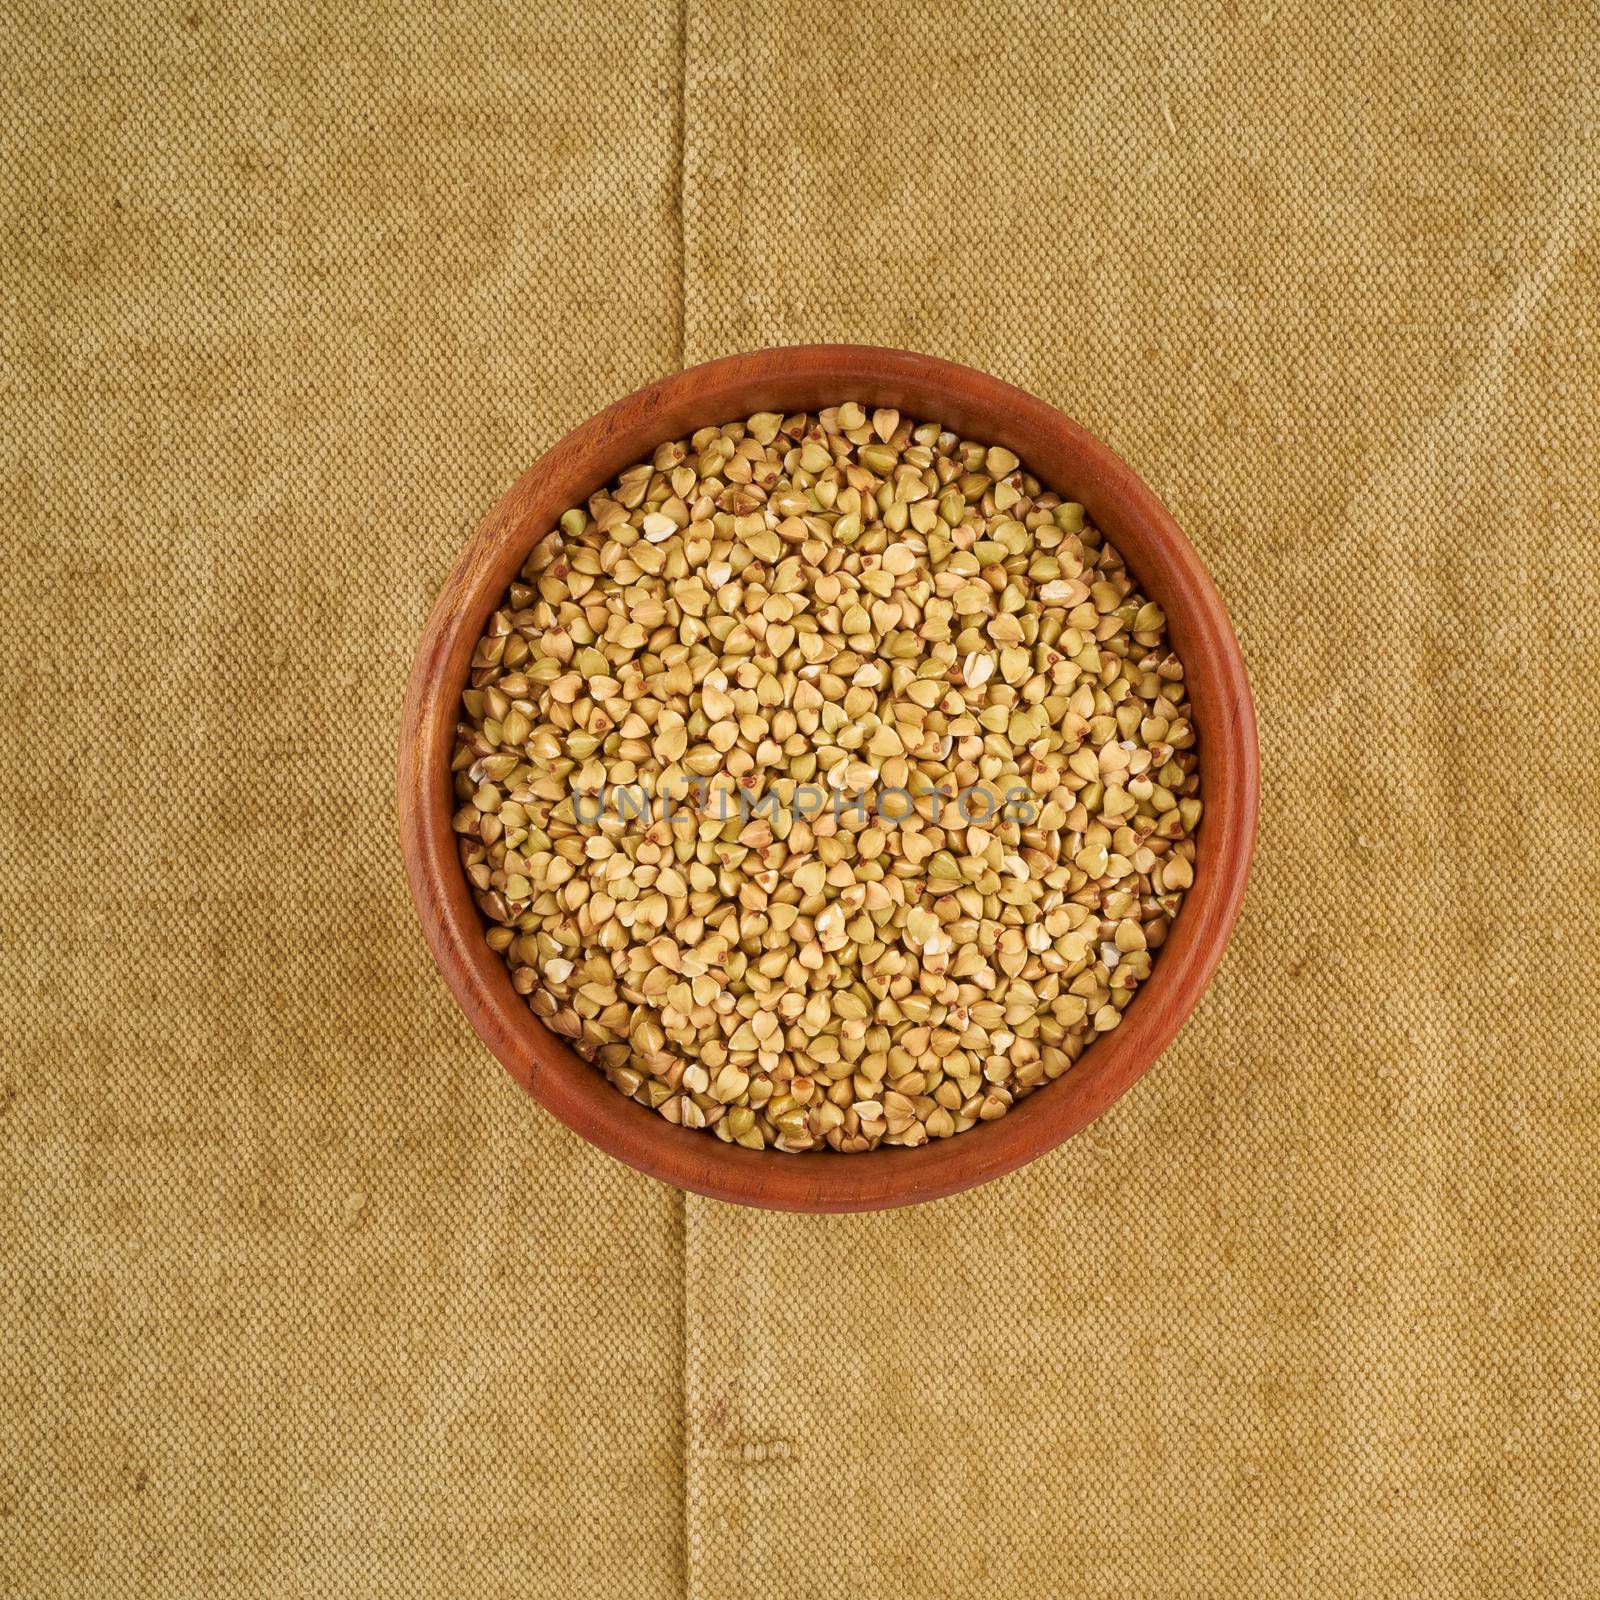 green buckwheat in wooden bowl on old linen napkin, gluten free wholegrain, fodmap diet by NataBene